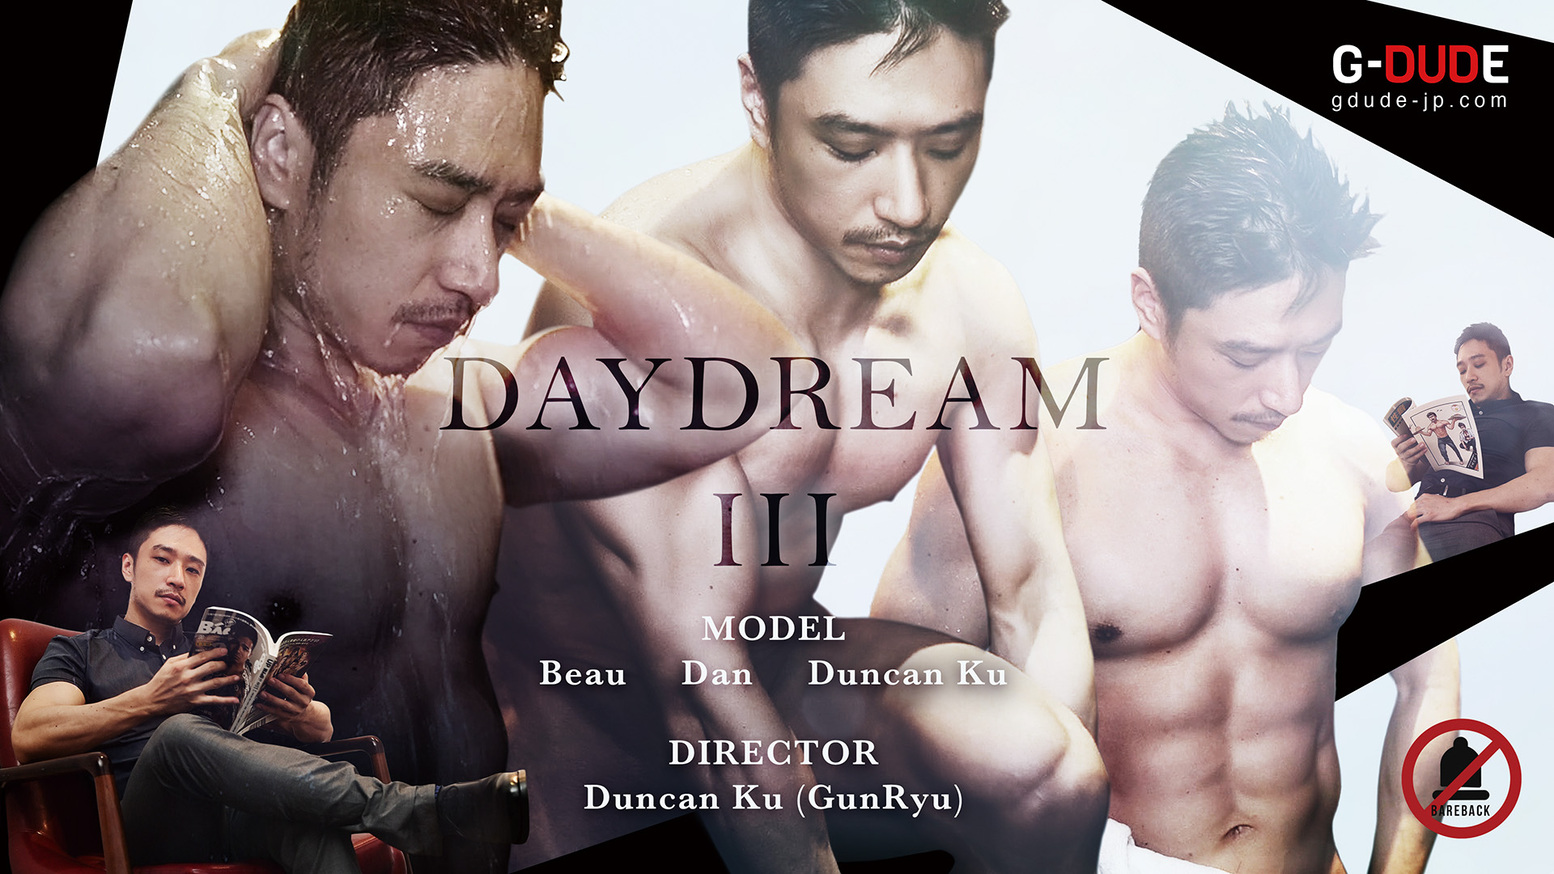 Daydream III